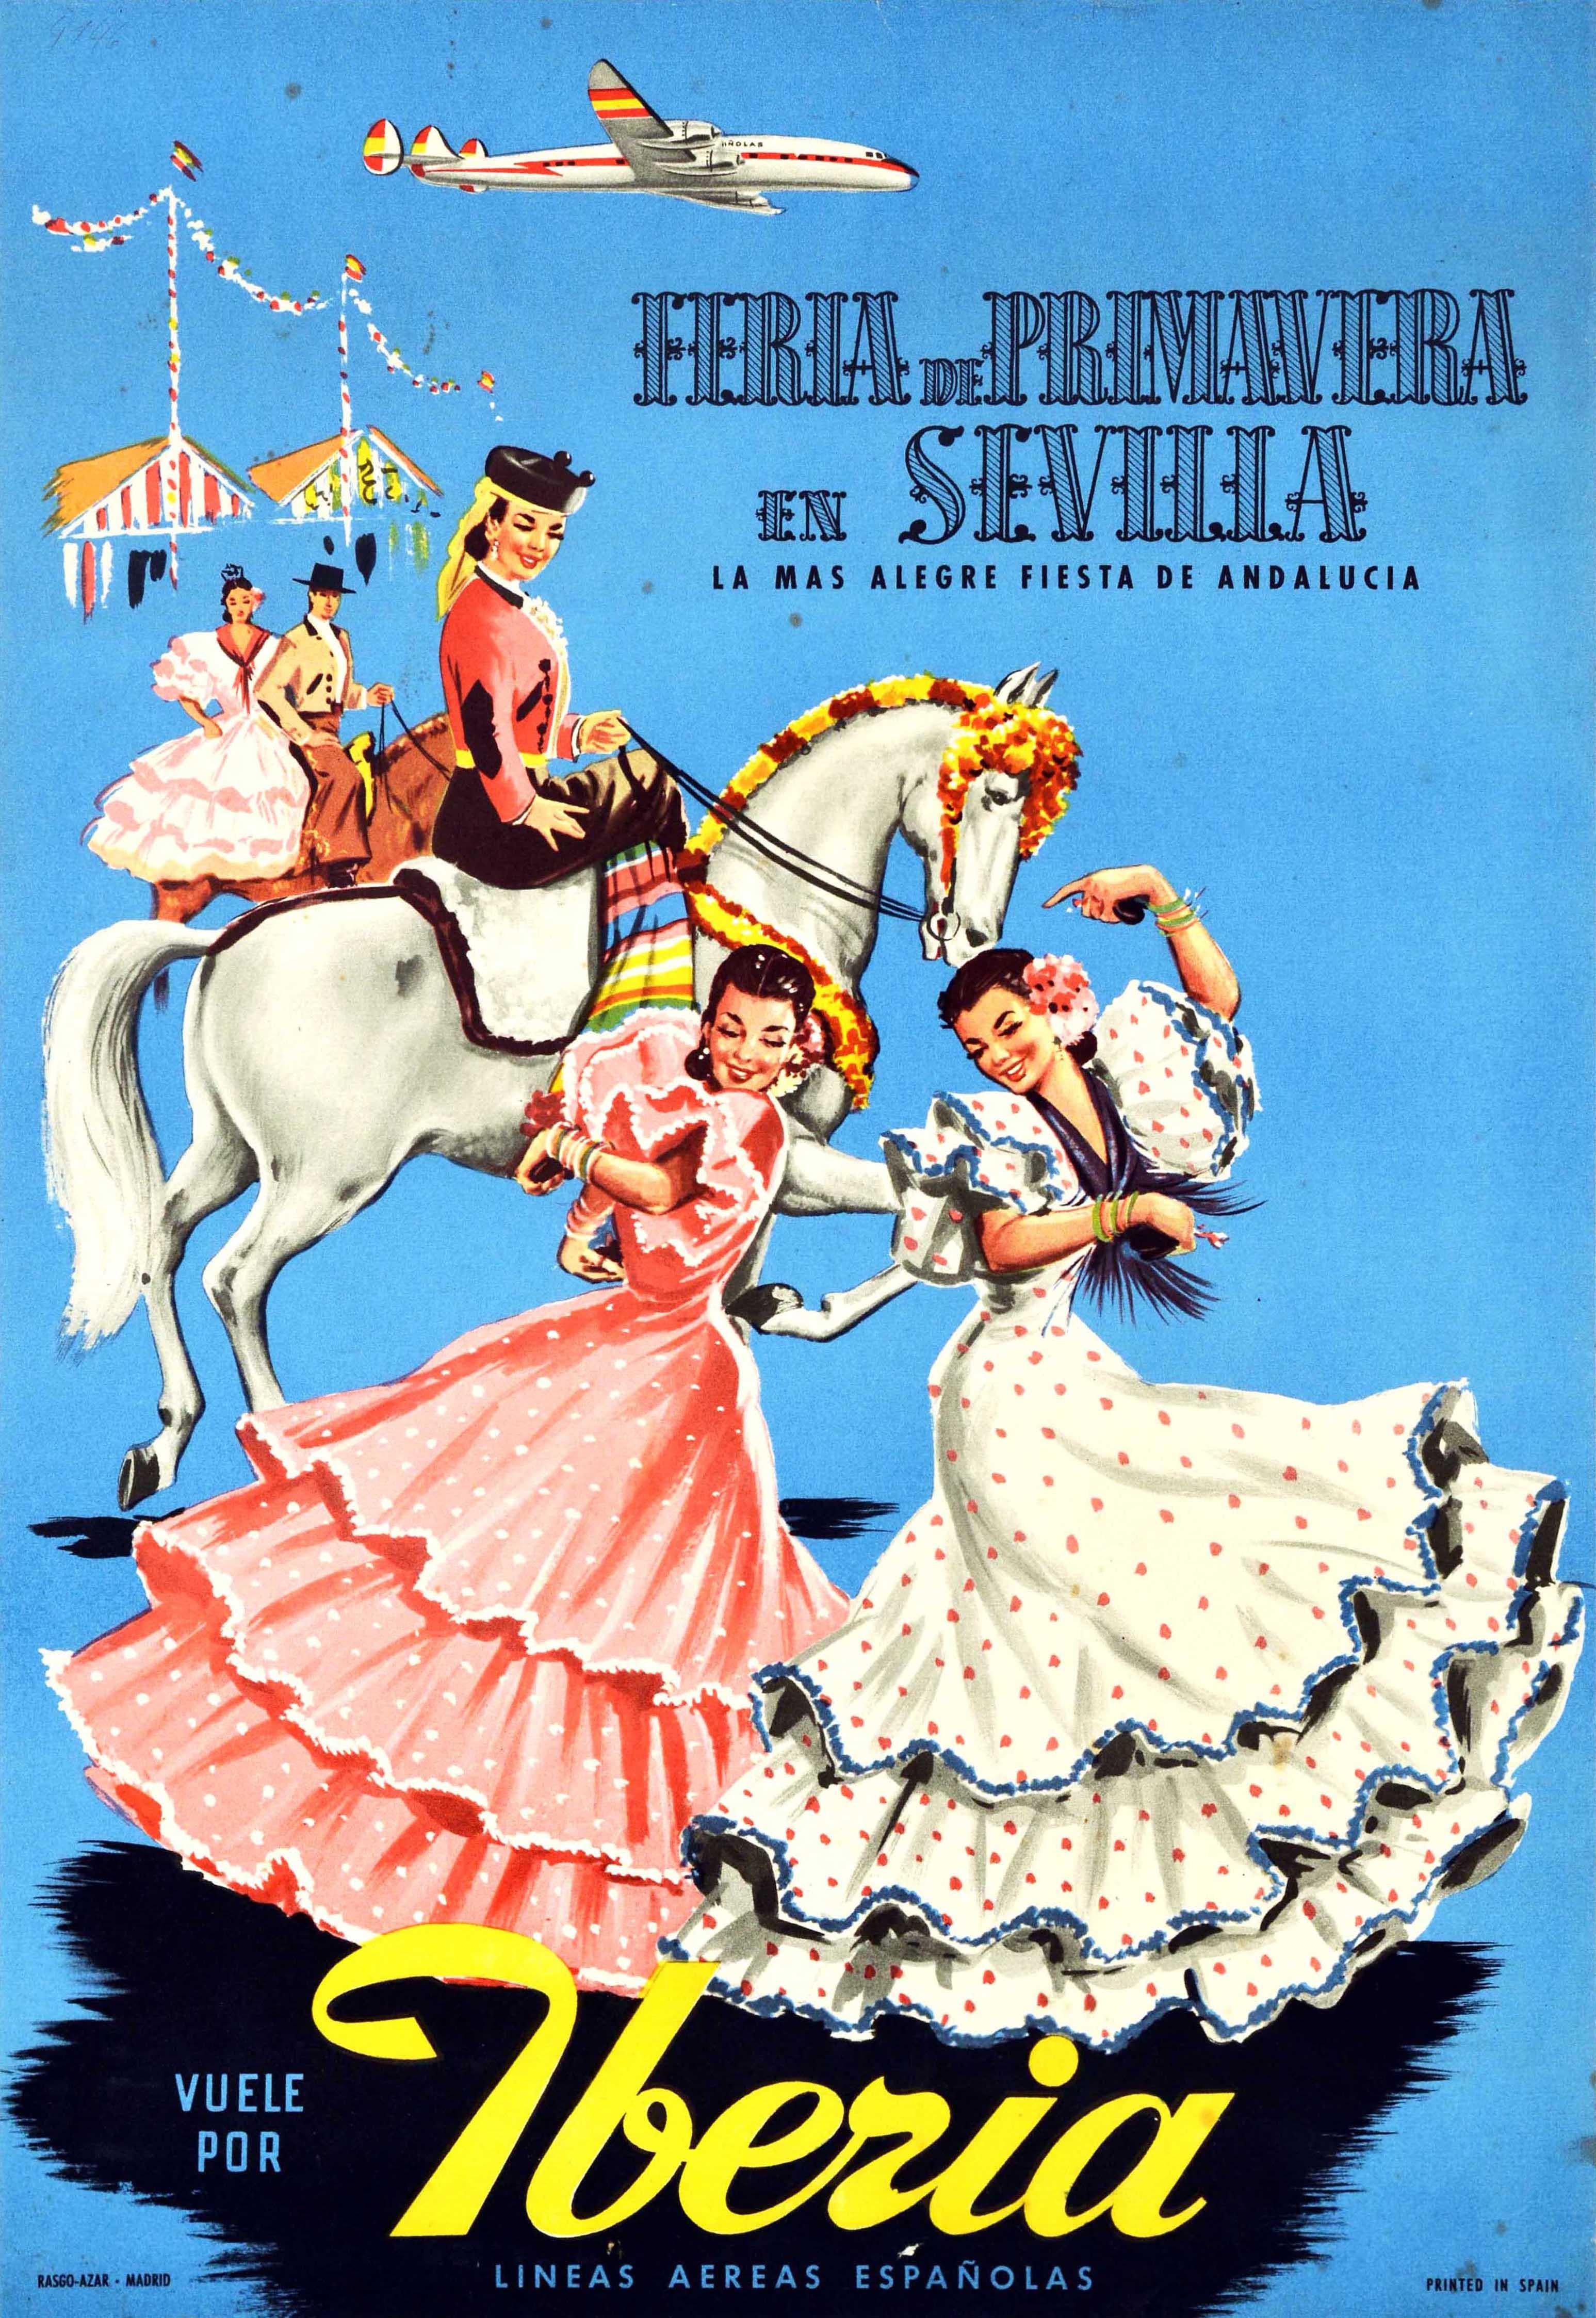 Unknown Print - Original Vintage Iberia Airlines Travel Poster Fiera De Primavera Sevilla Spain